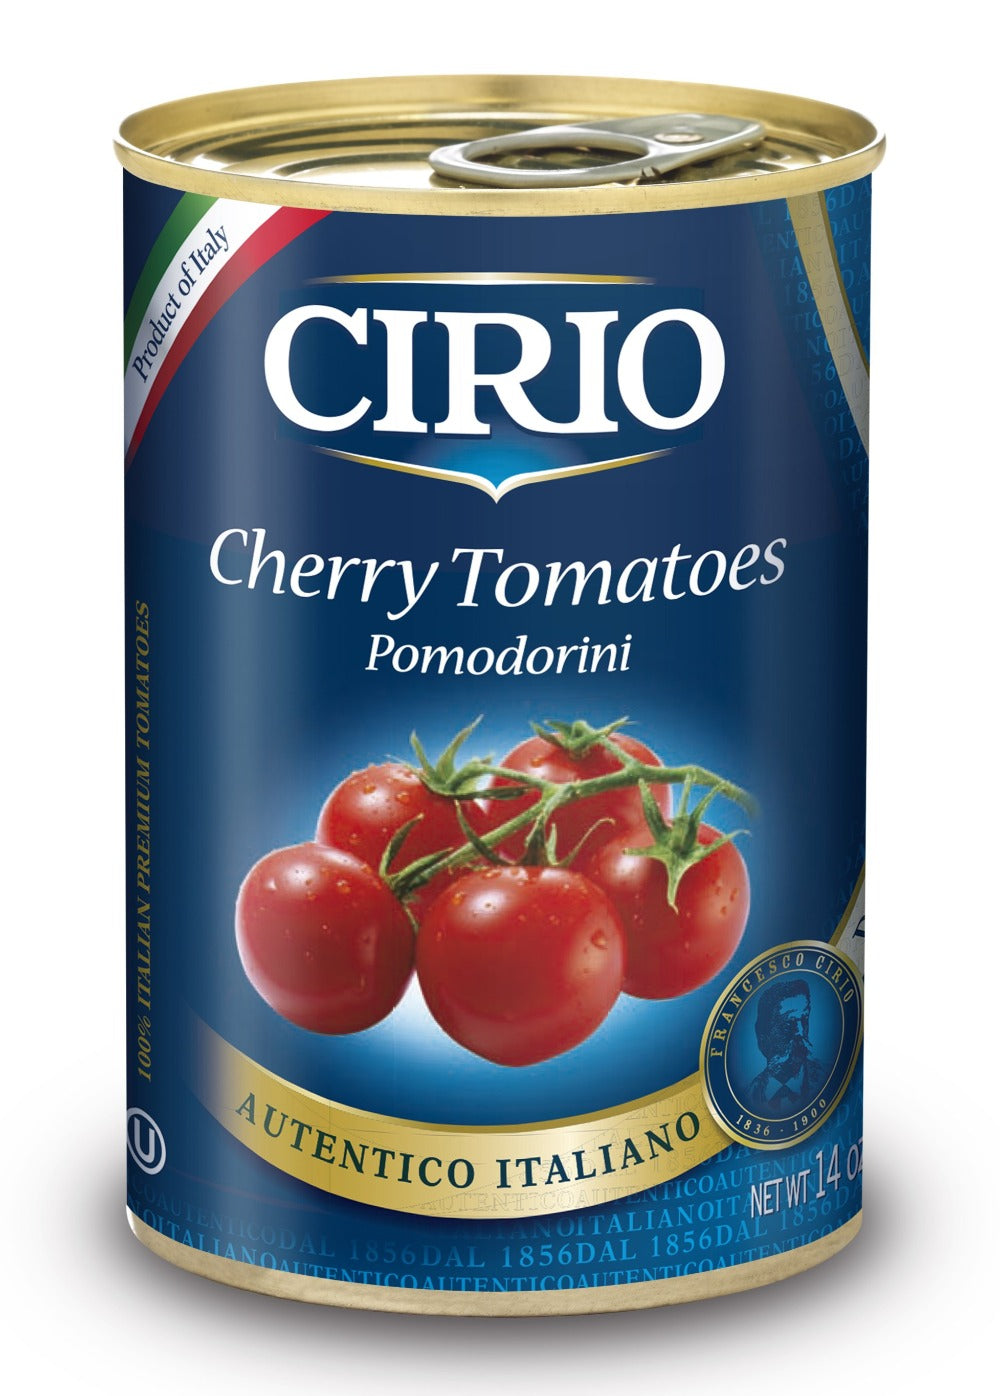 Cirio - Cherry Tomatoes Pomodorini - 397g